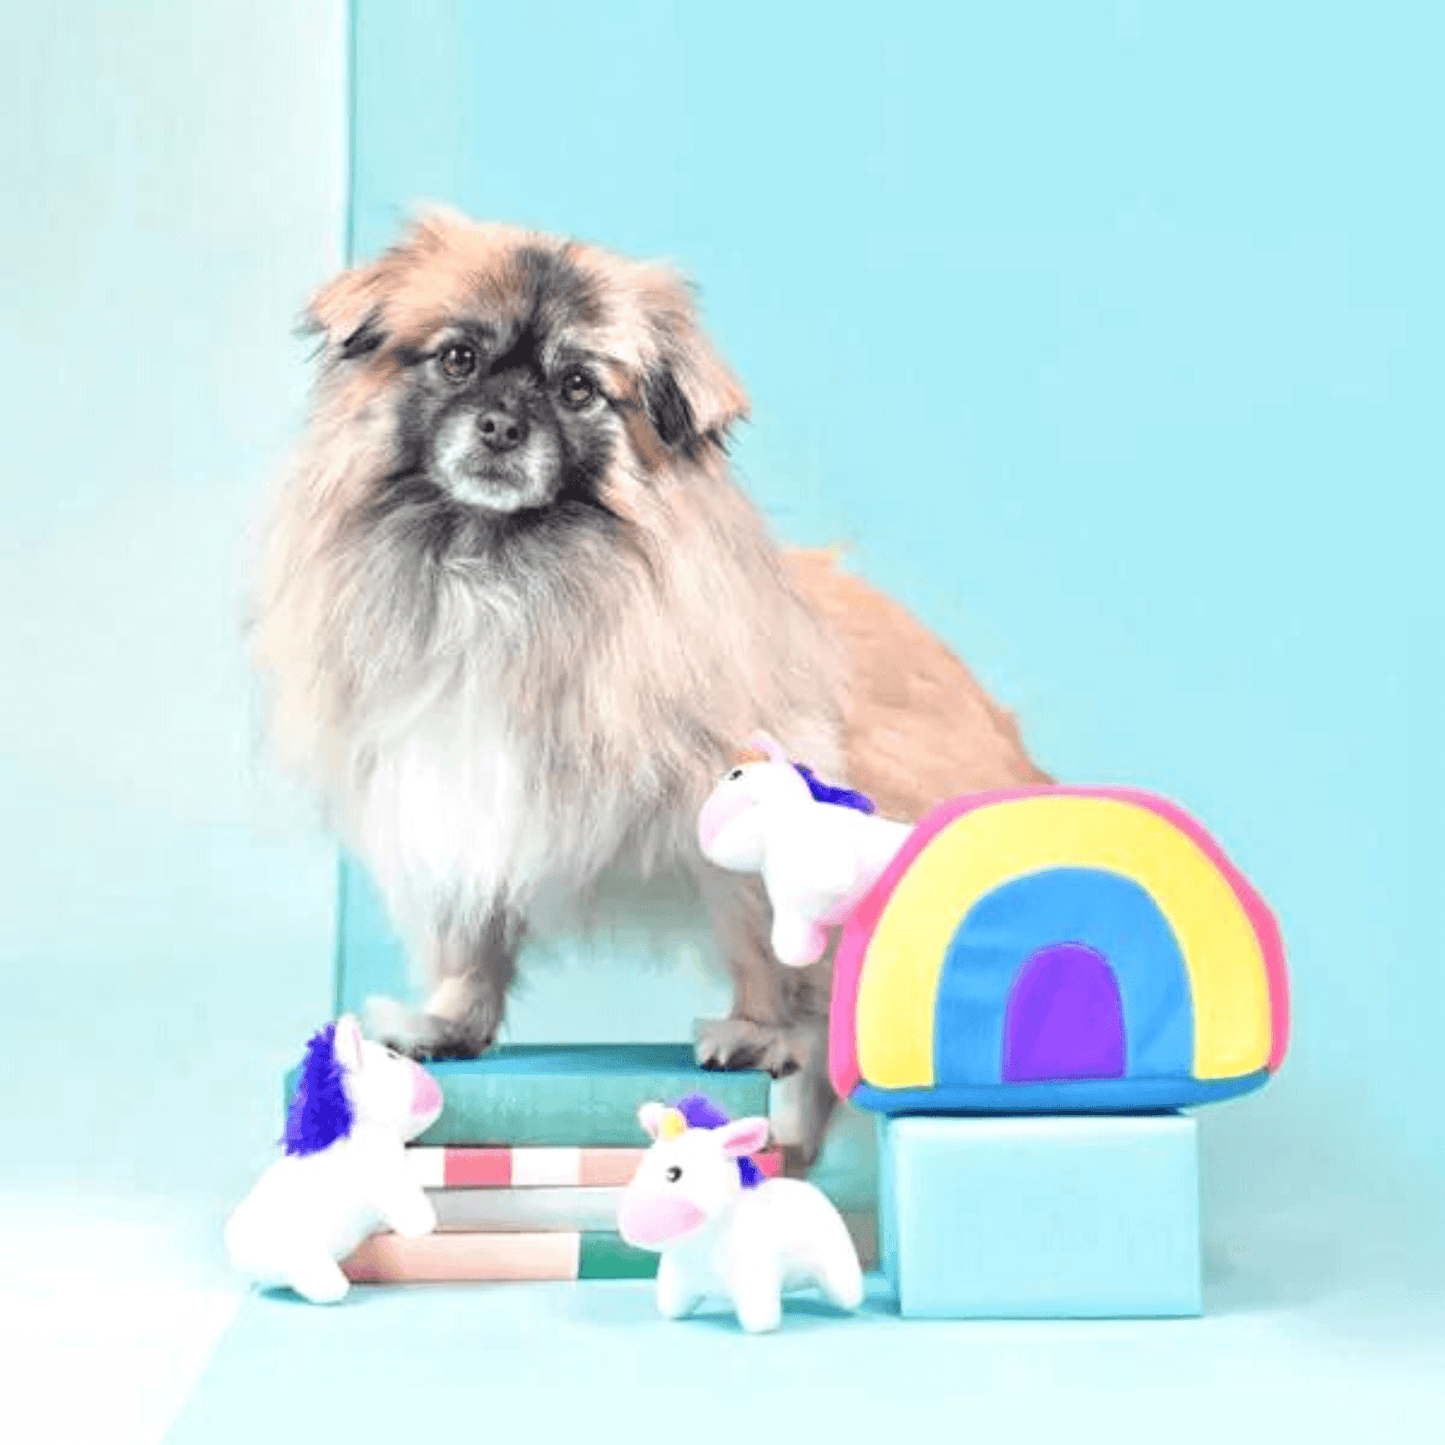 Unicorn Rainbow Dog toy burrow, interactive, fun, squeaky